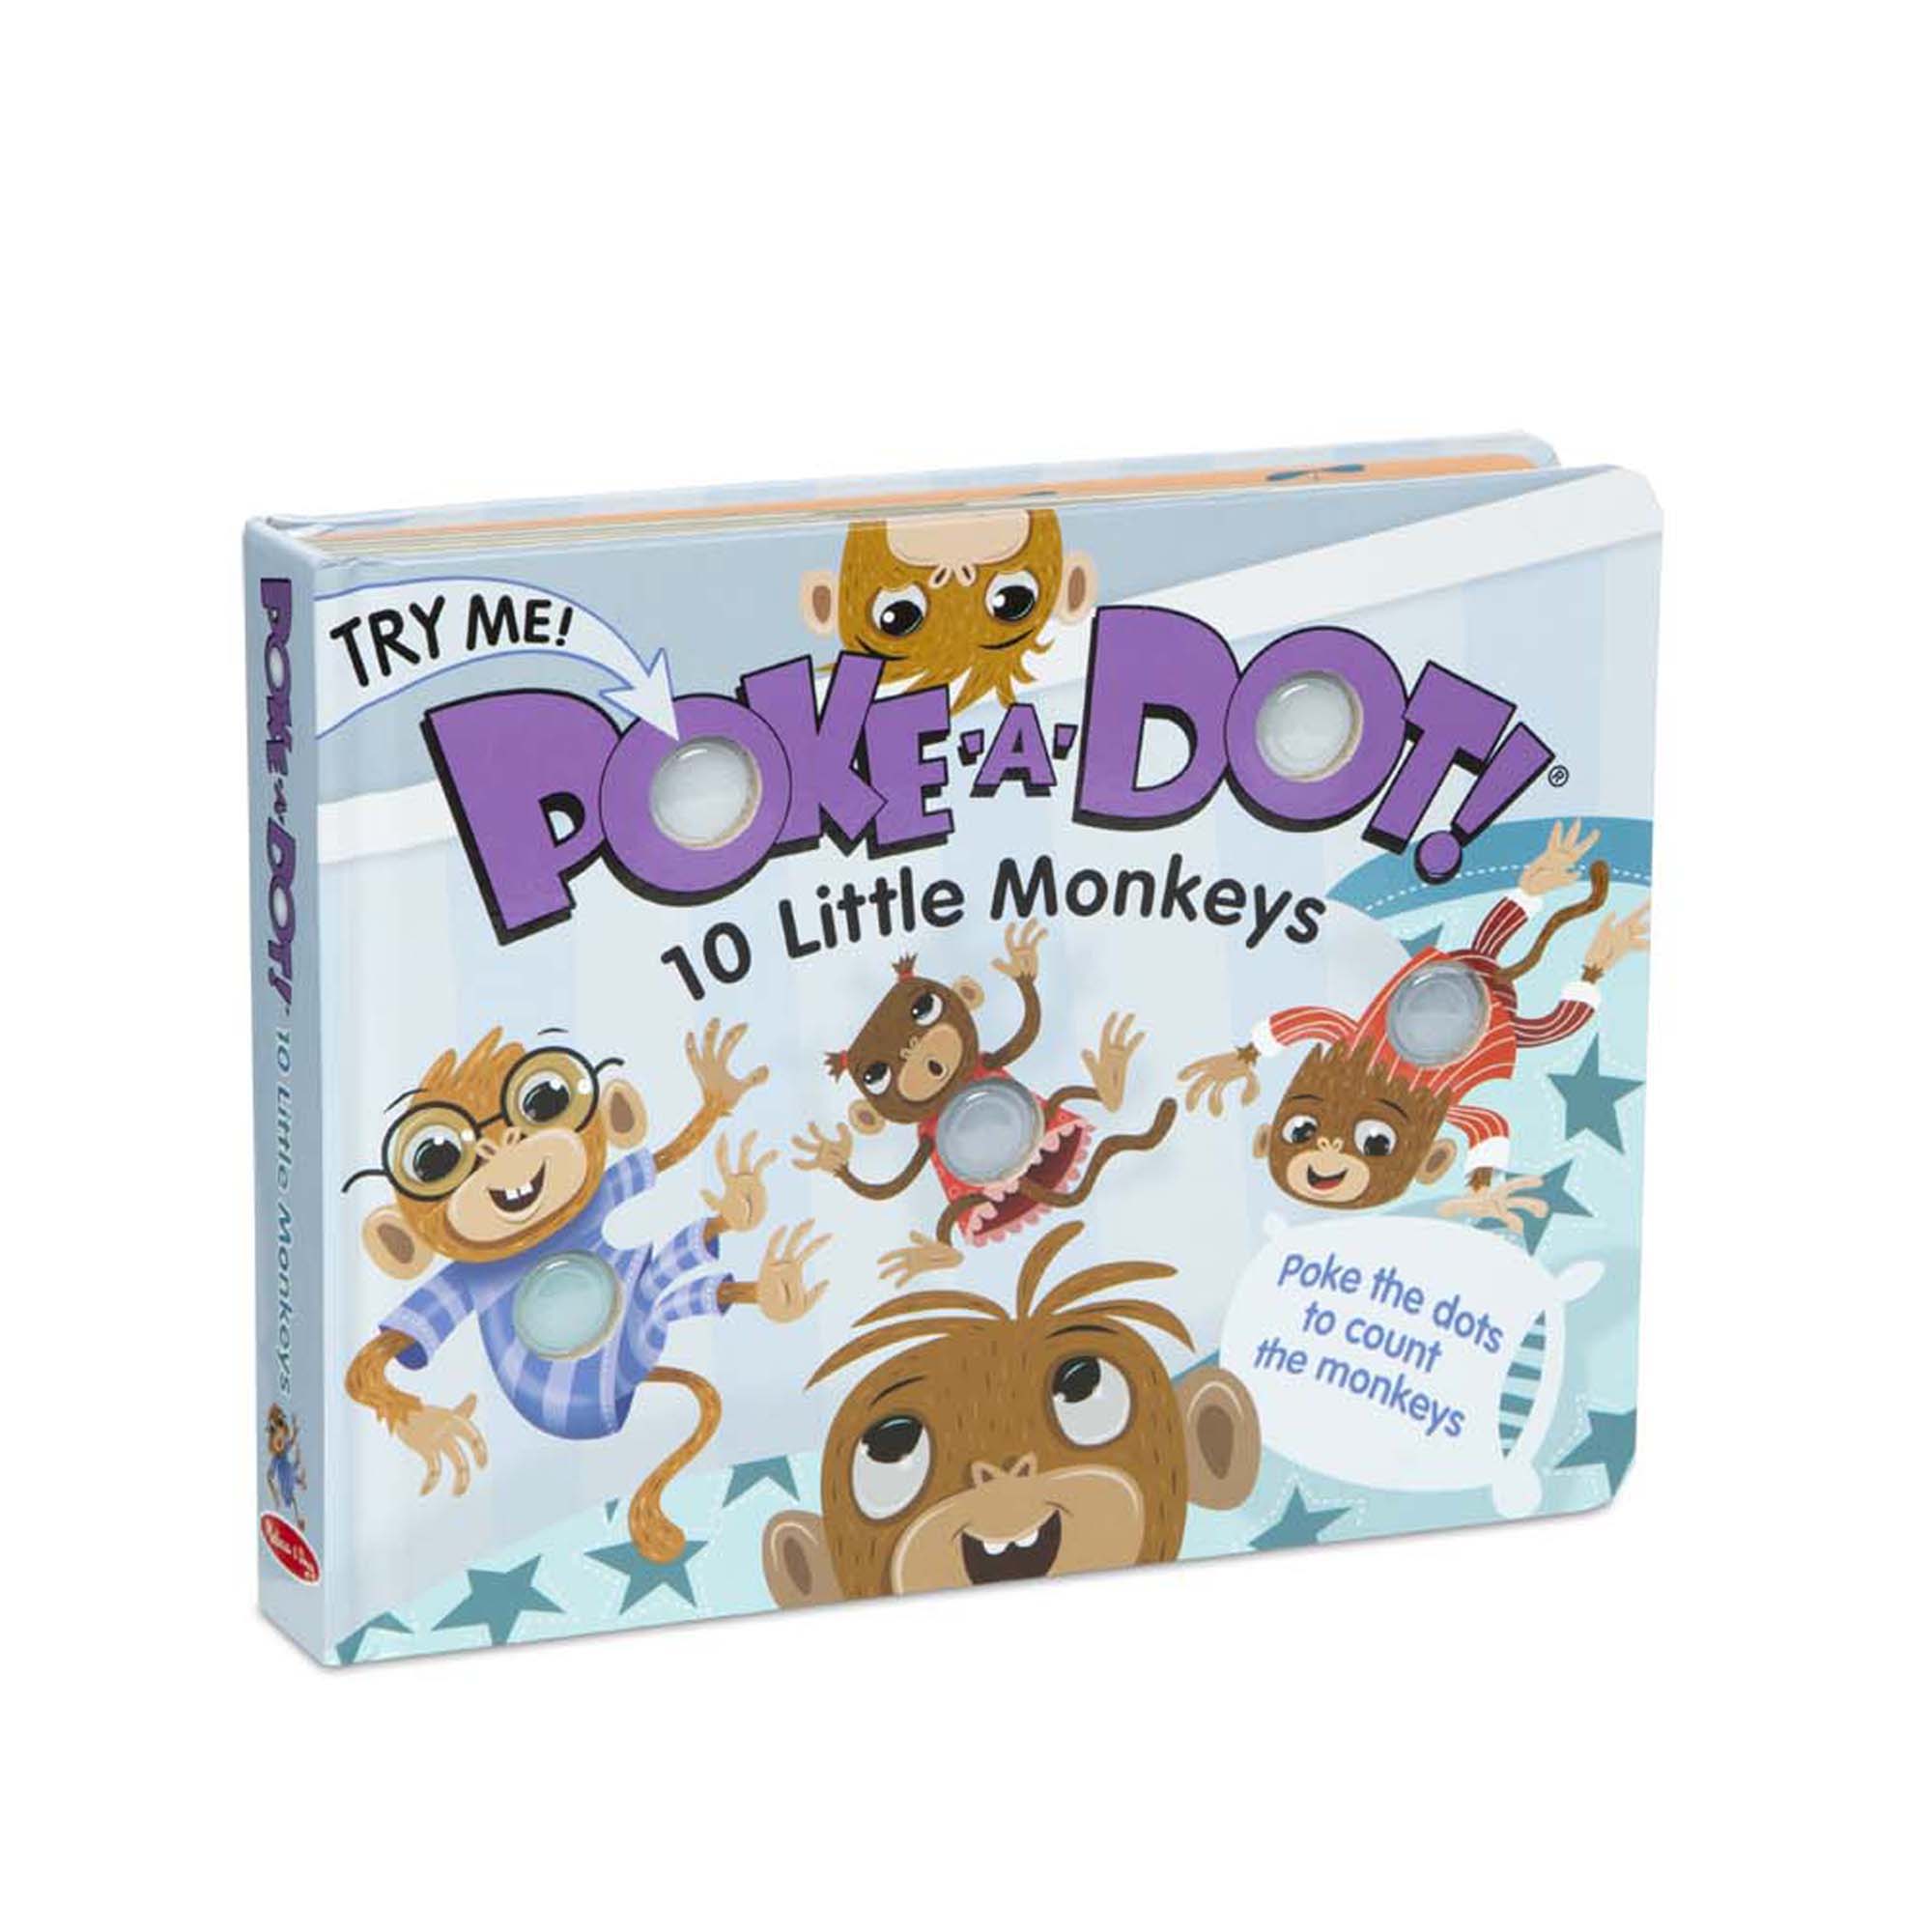 Melissa & Doug รุ่น 31345 Poke-A-Dot: 10 Little Monkeys หนังสือปุ่มกด รุ่นลิง 10 ตัว อ่านไป กดไป ดึงดูดความสนใจ สนุก!